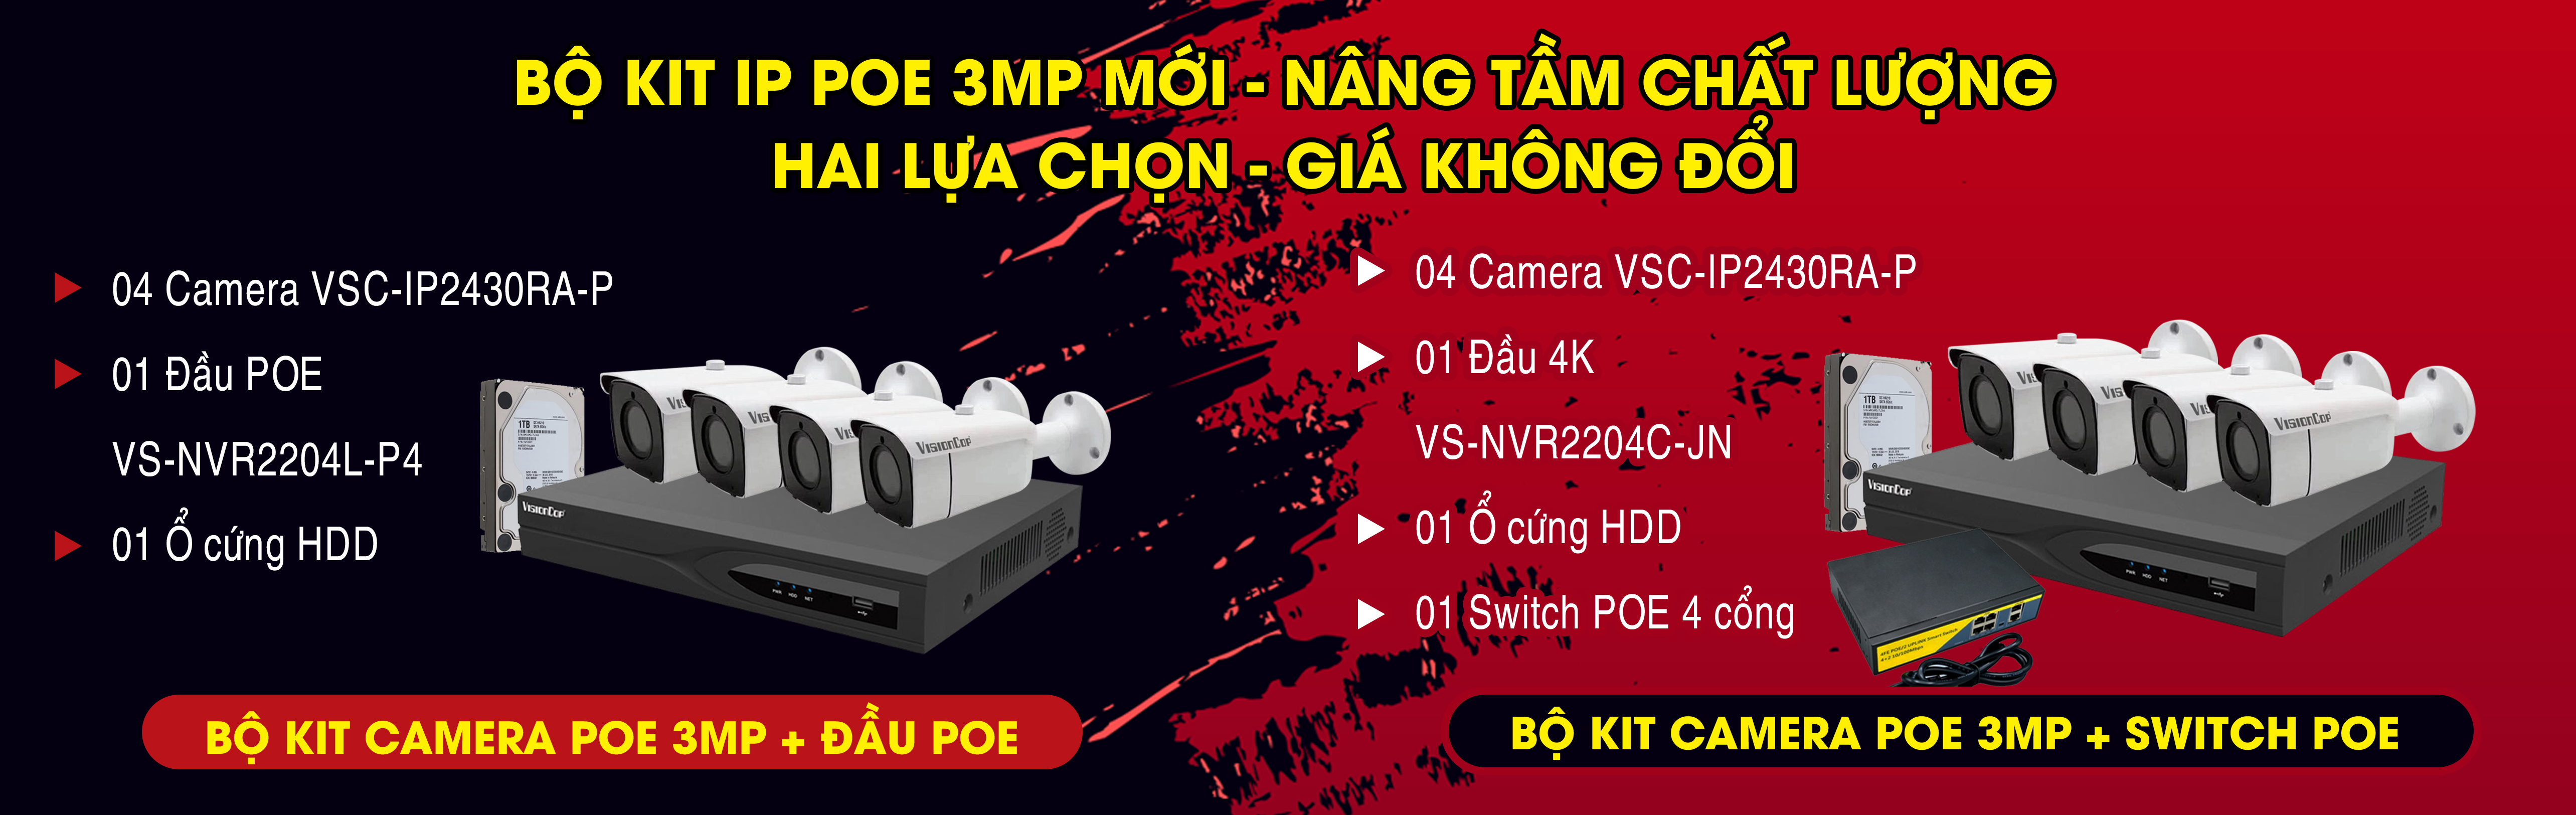 http://visioncop.com/gioi-thieu-bo-kit-ip-poe-3mp-moi-thuong-hieu-visioncop